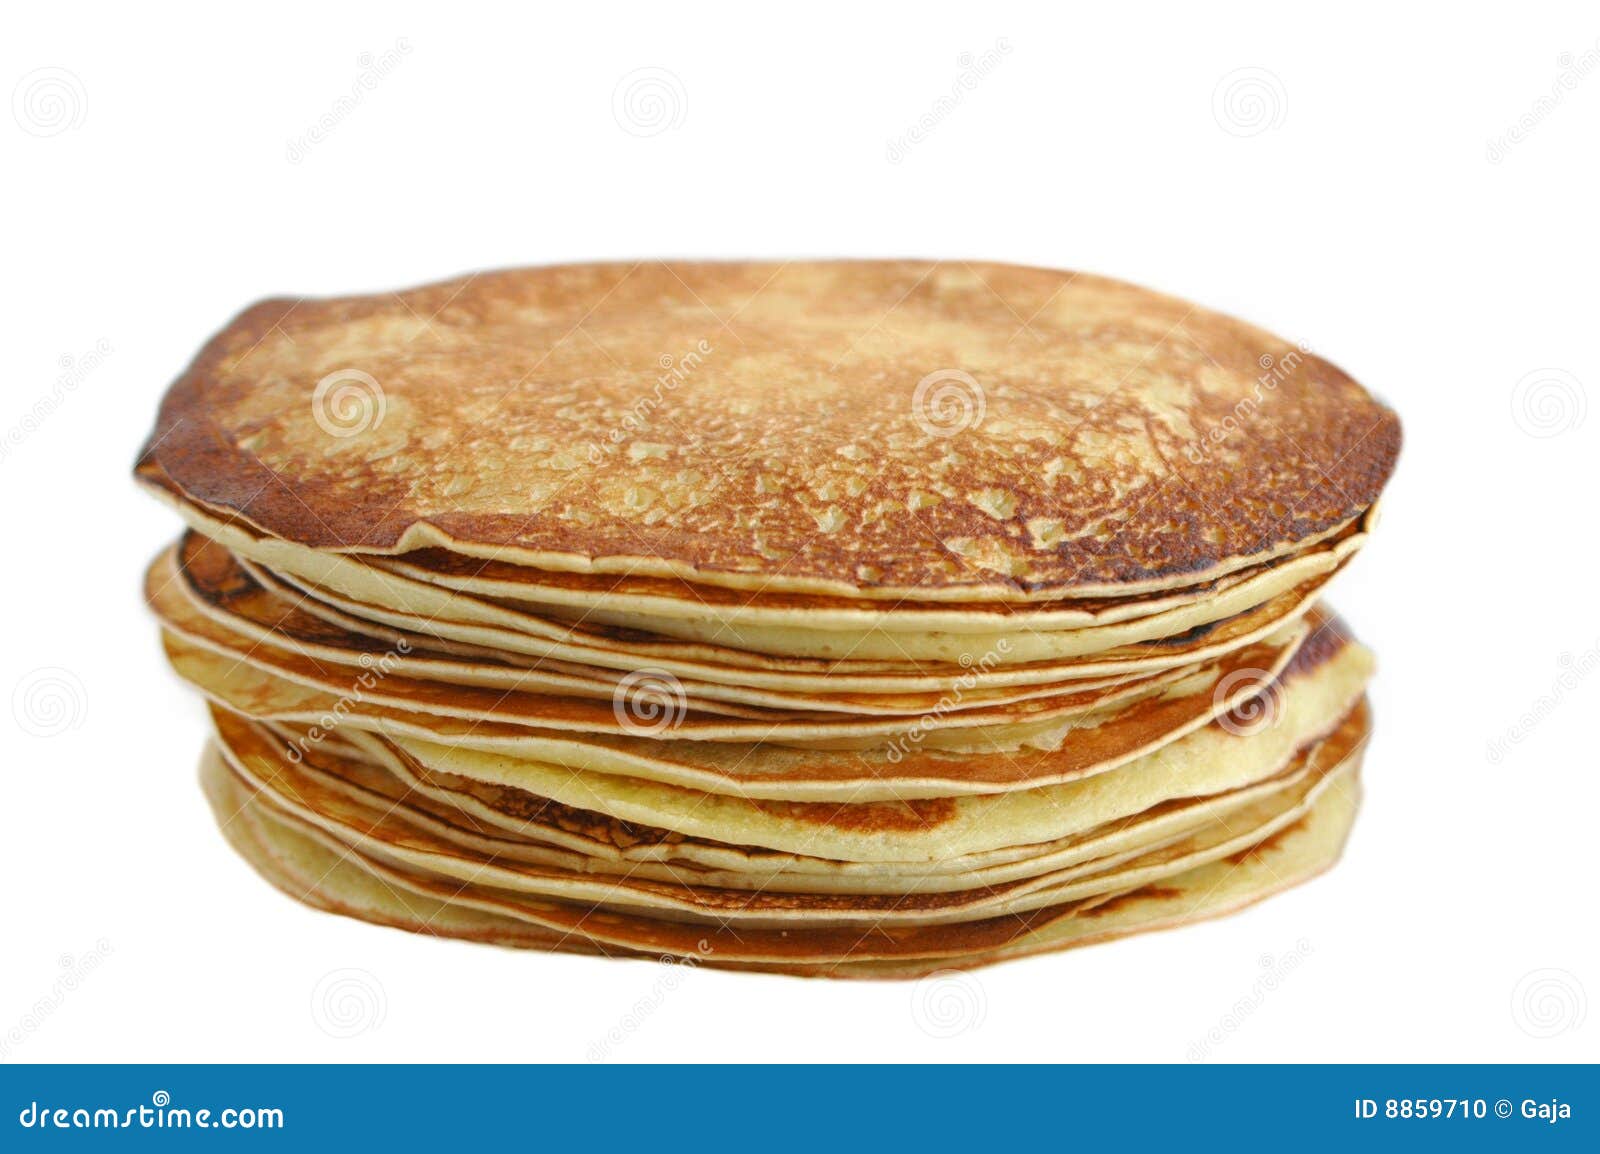 Plain stack of pancakes stock photo. Image of golden, pancakes - 8859710